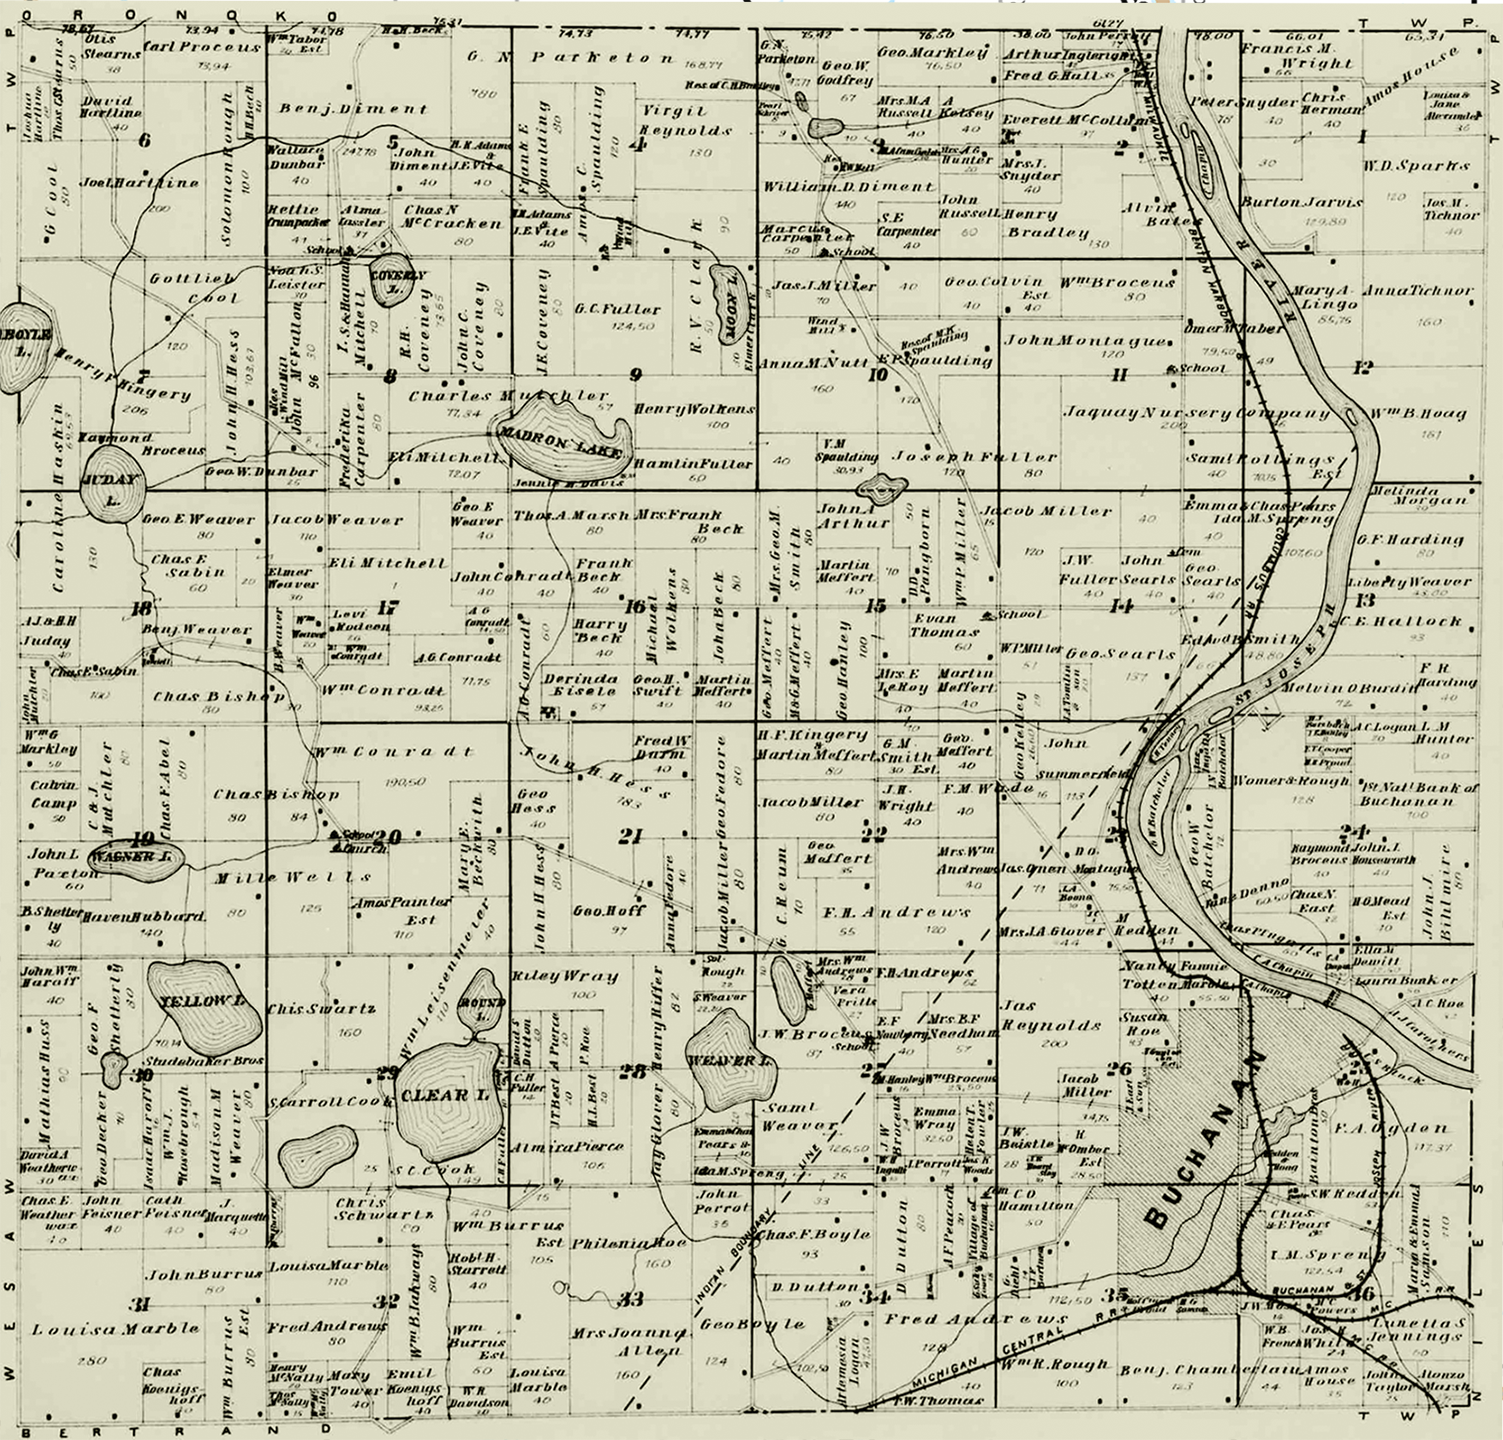 1903 Buchanan Township, Michigan landownership map